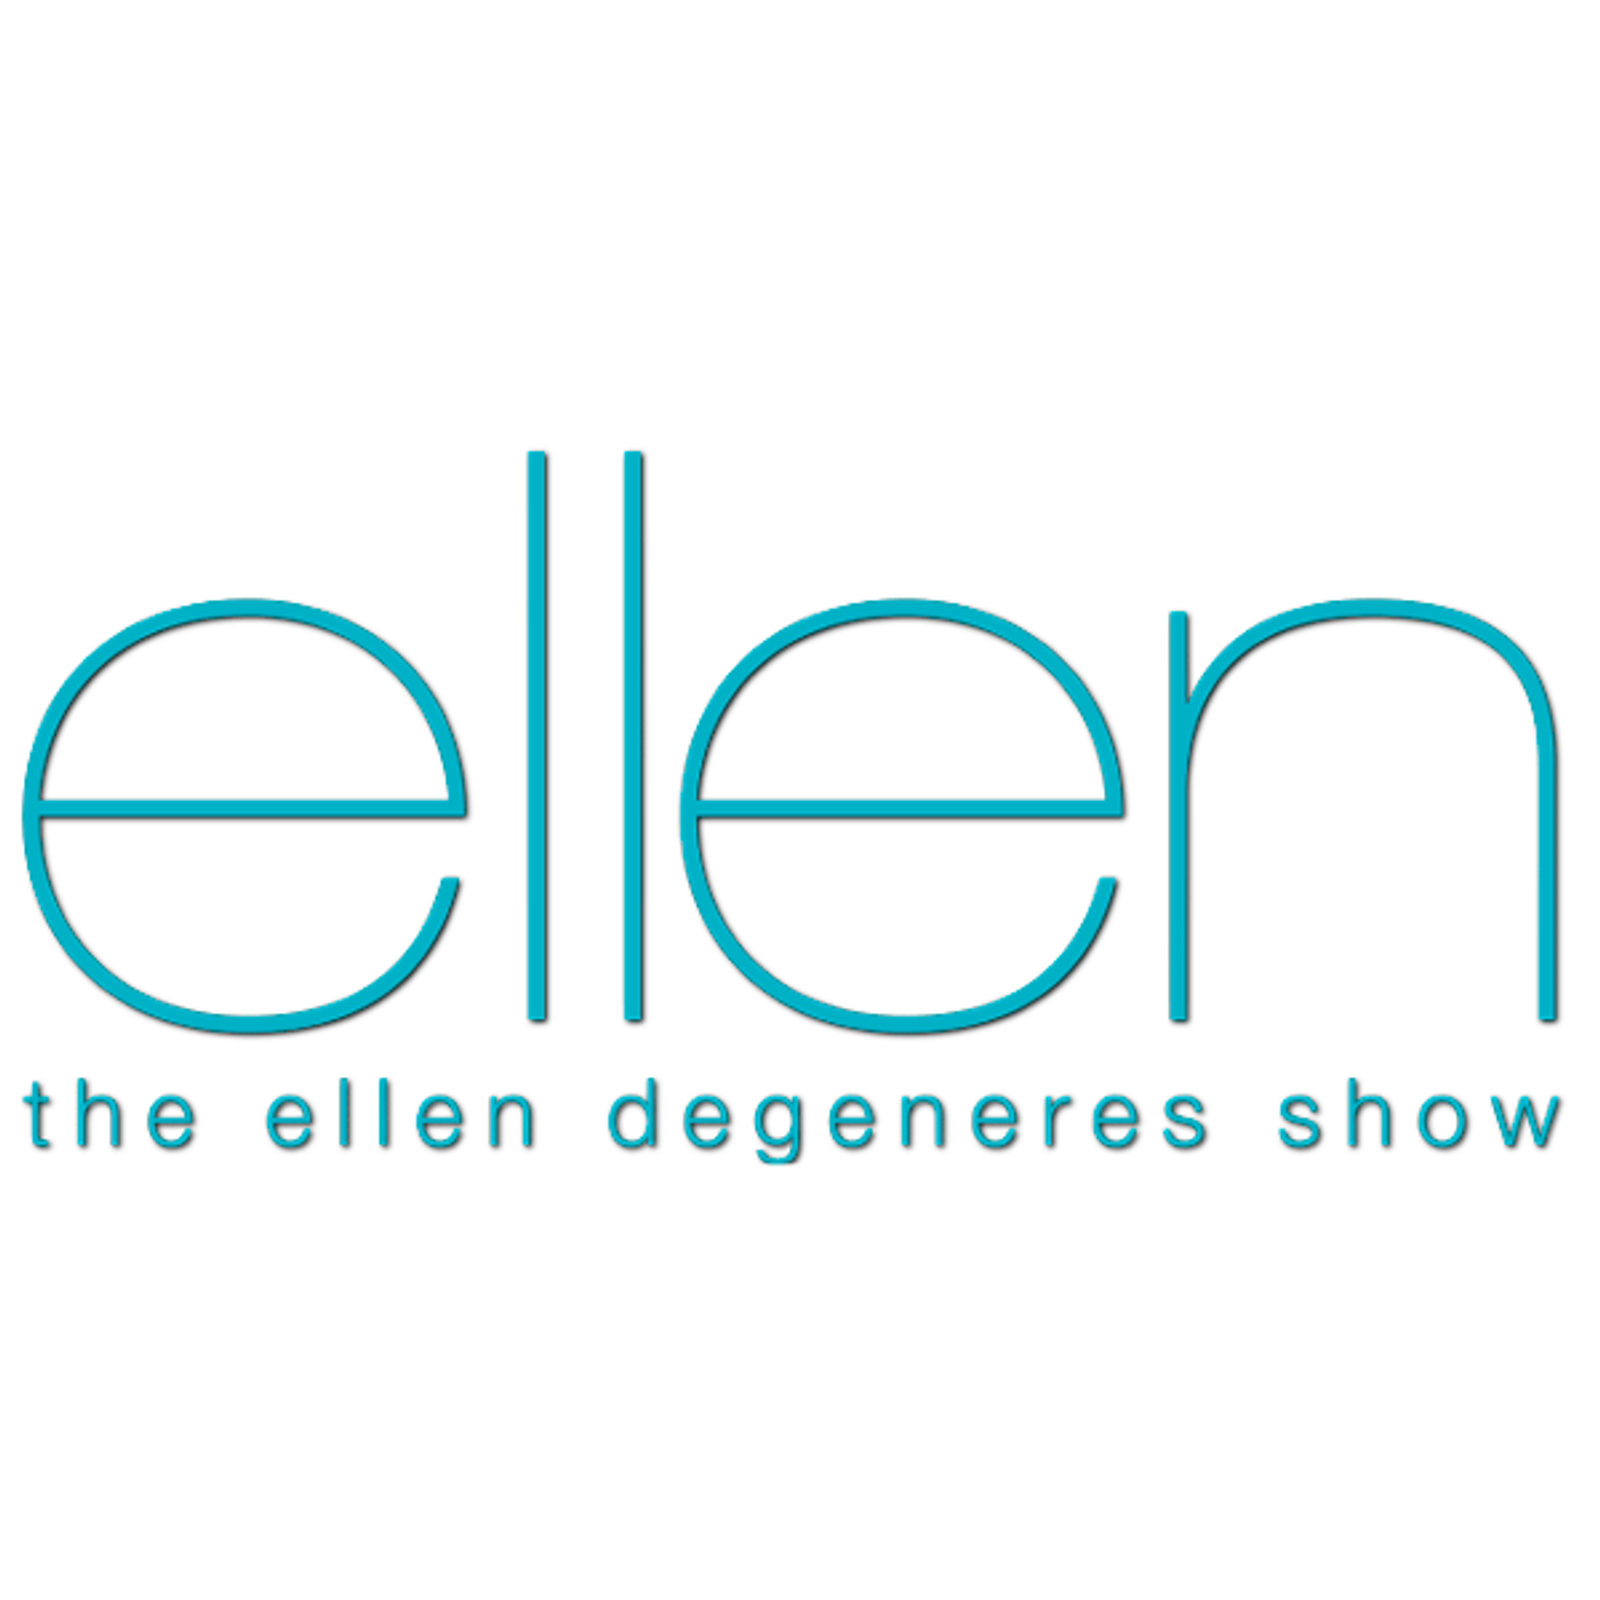 The Ellen DeGeneres Show: Keith Urban